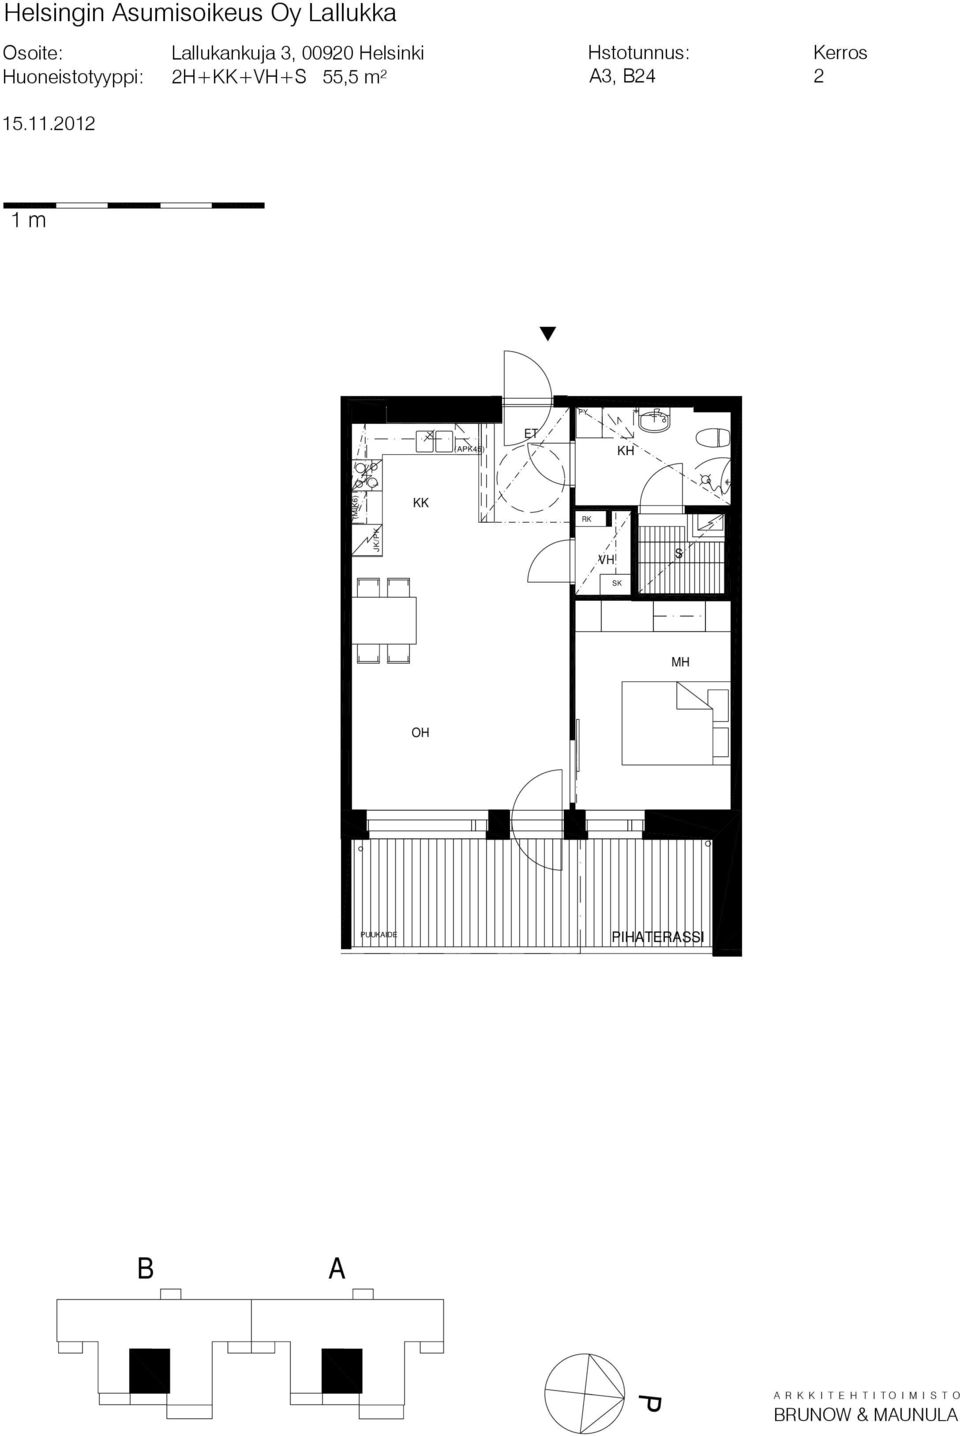 Huoneistotyyppi: 2H+++ 55,5 m² 3, 24 2 C